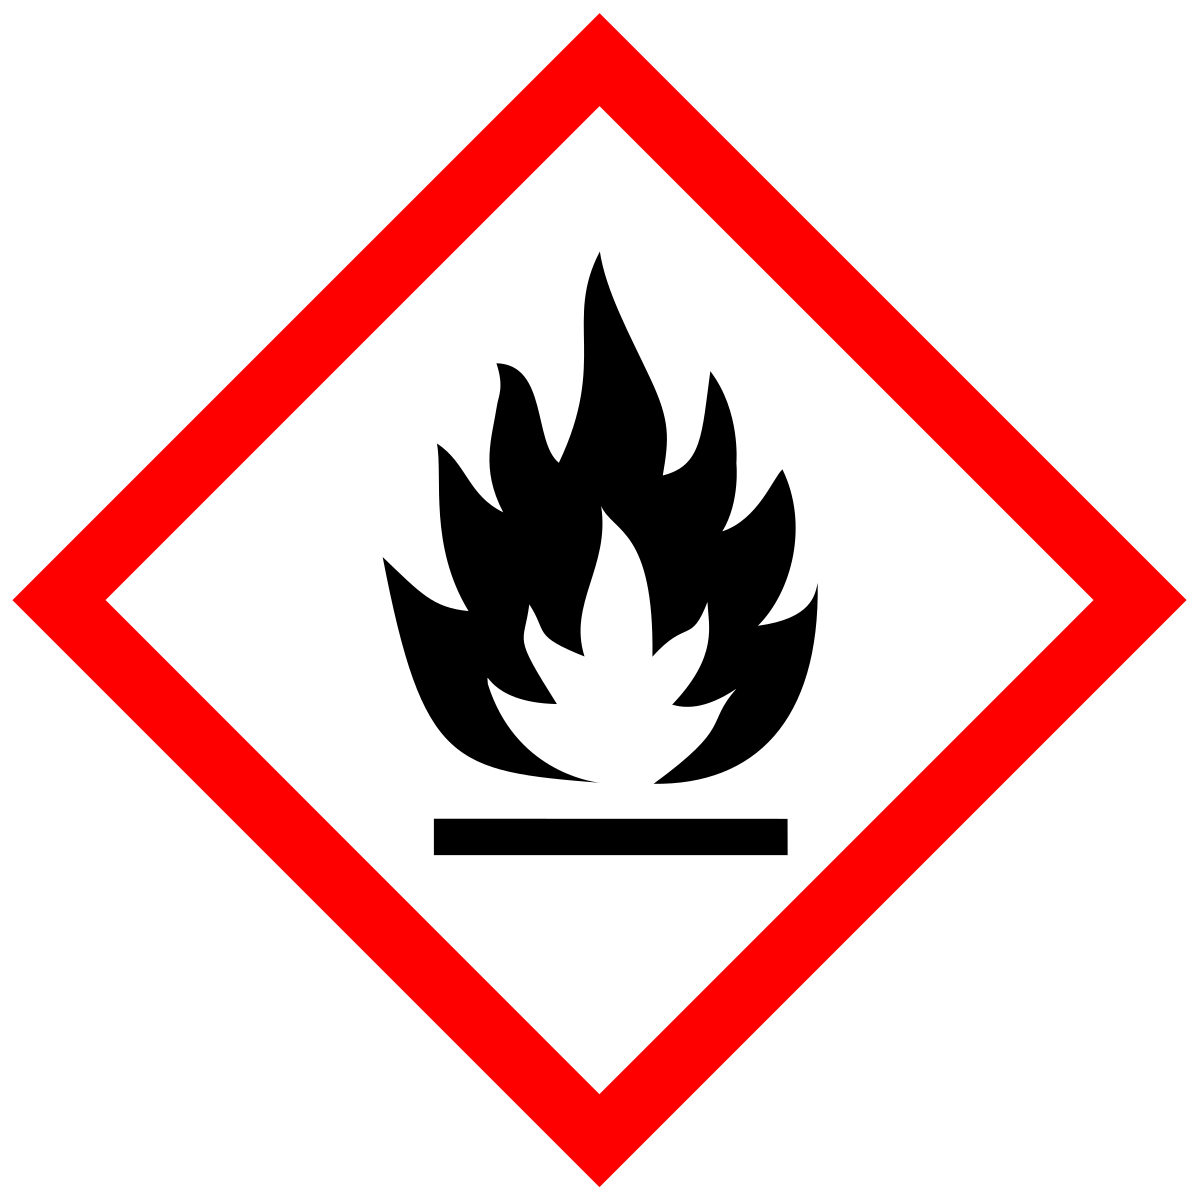 Fire Hazard Class of Berger Paints red oxide primer